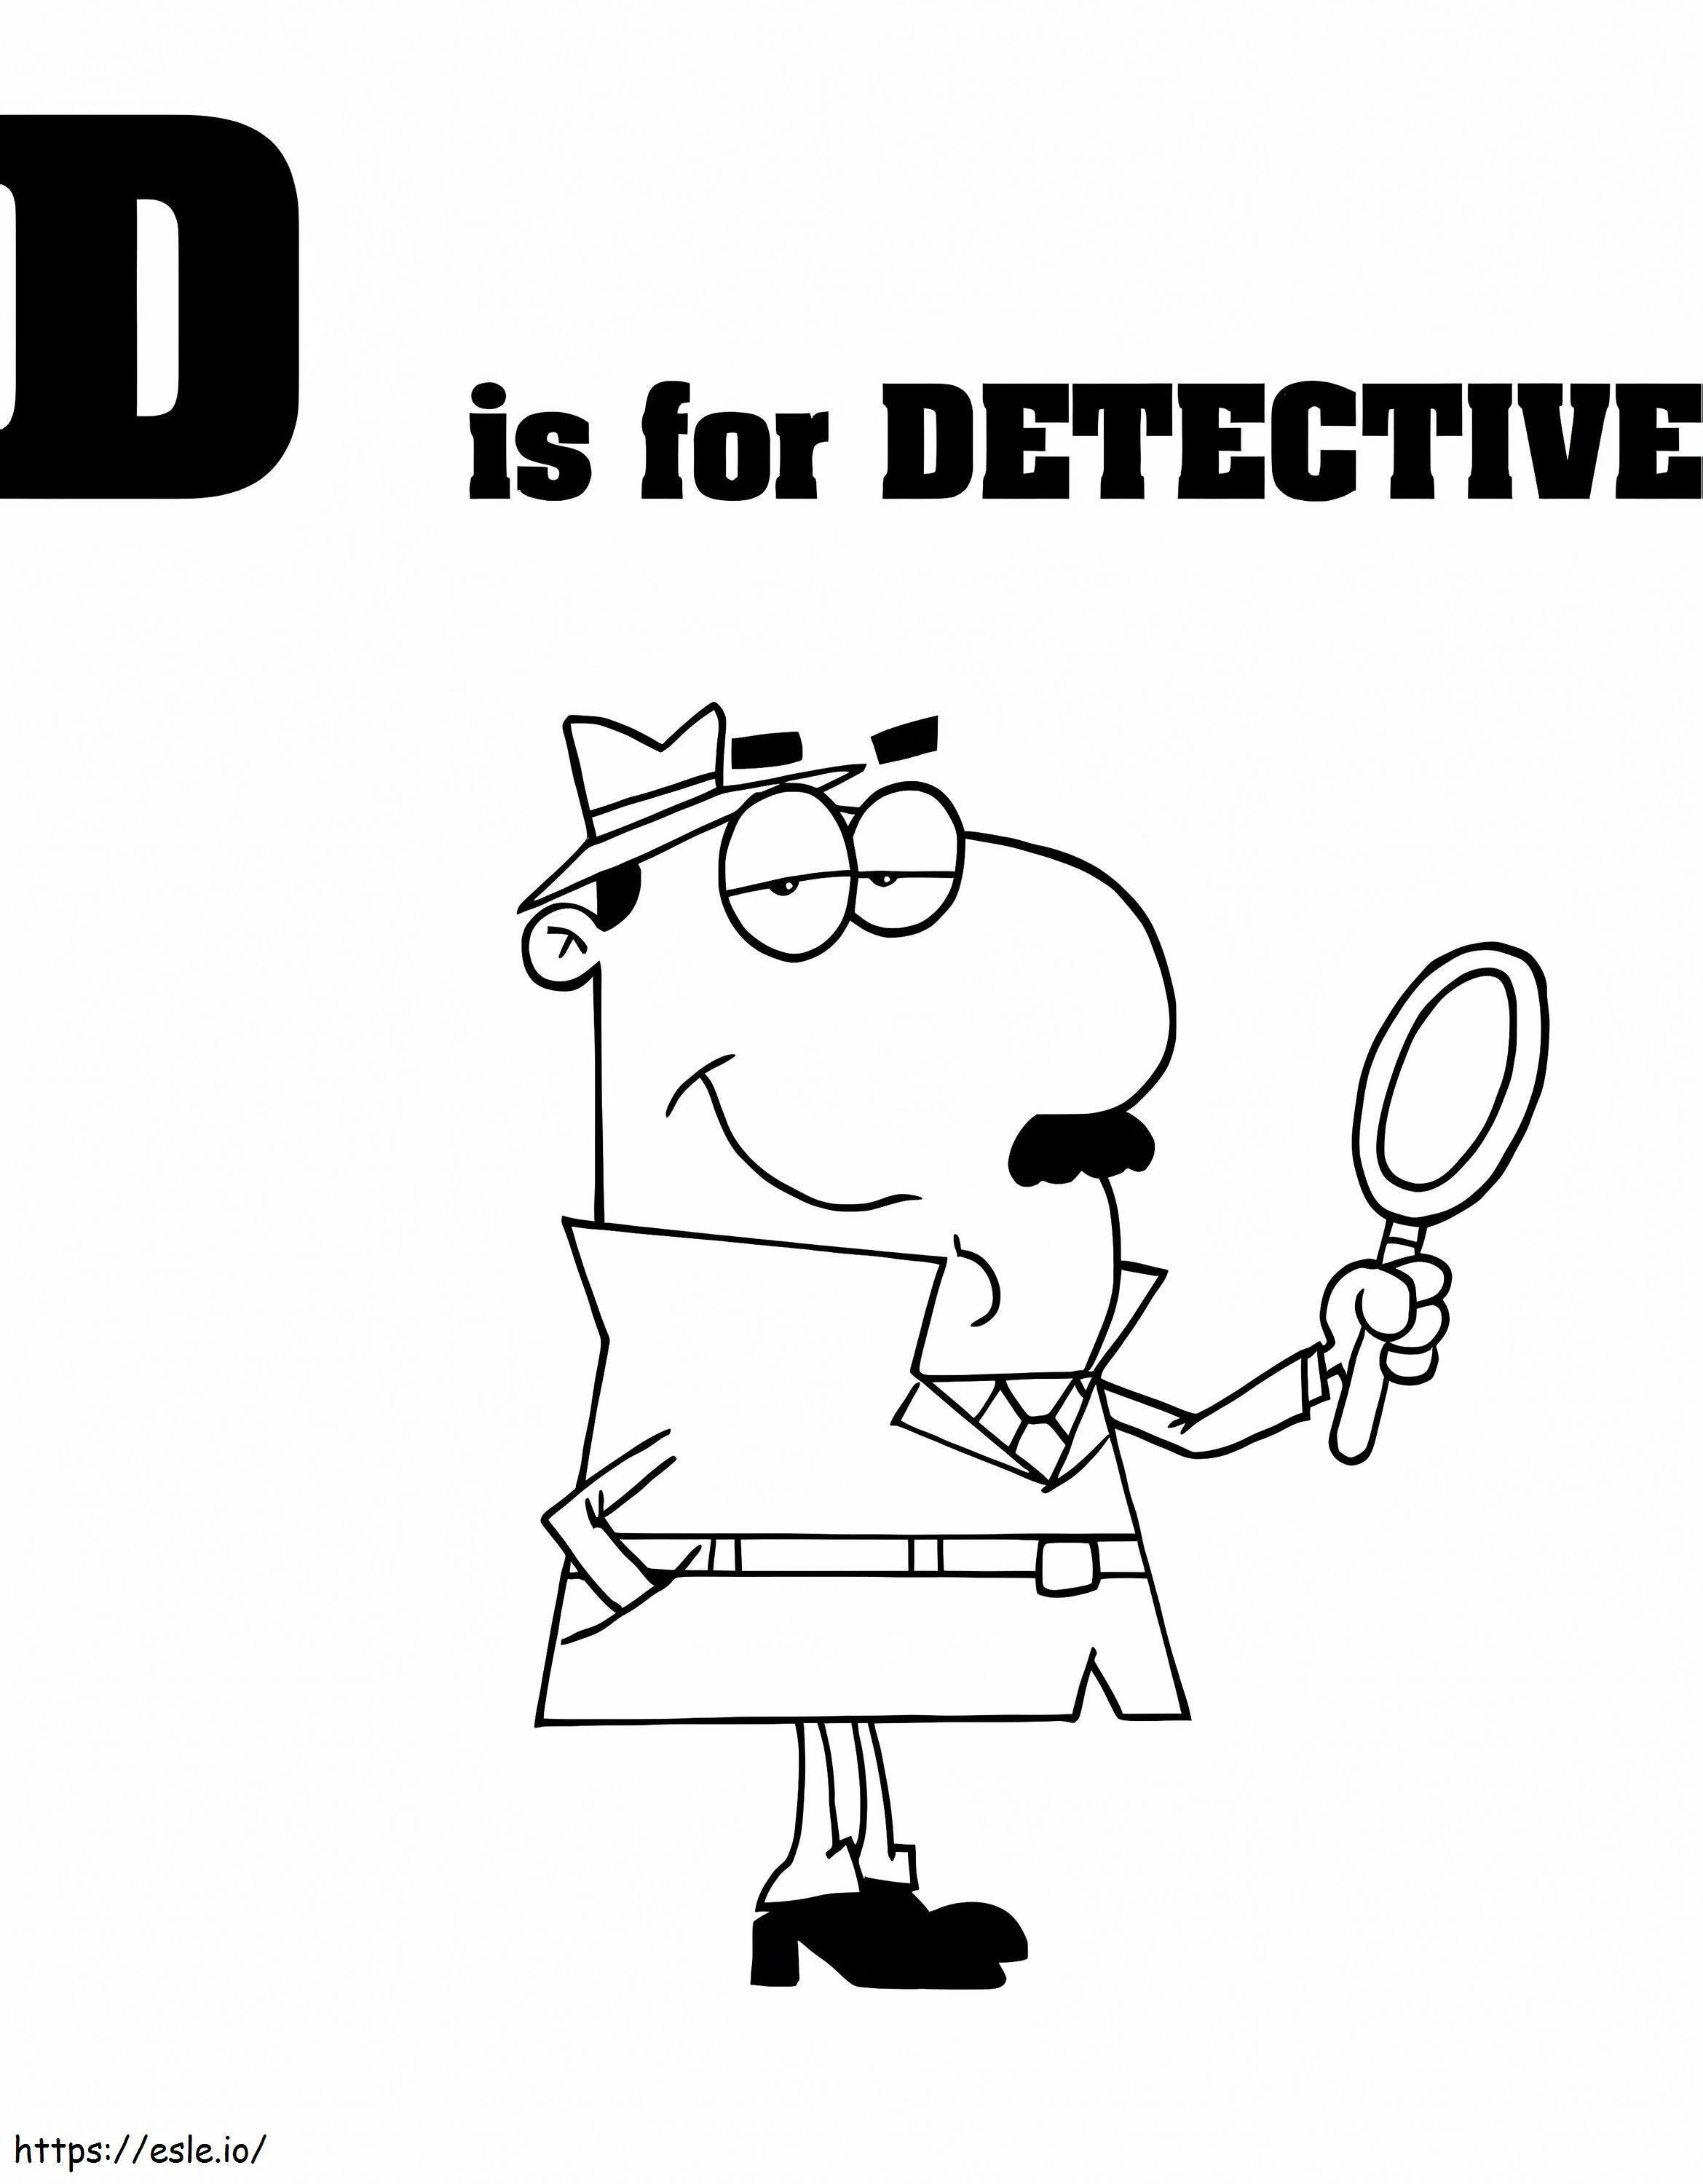 Detective Letra D para colorear